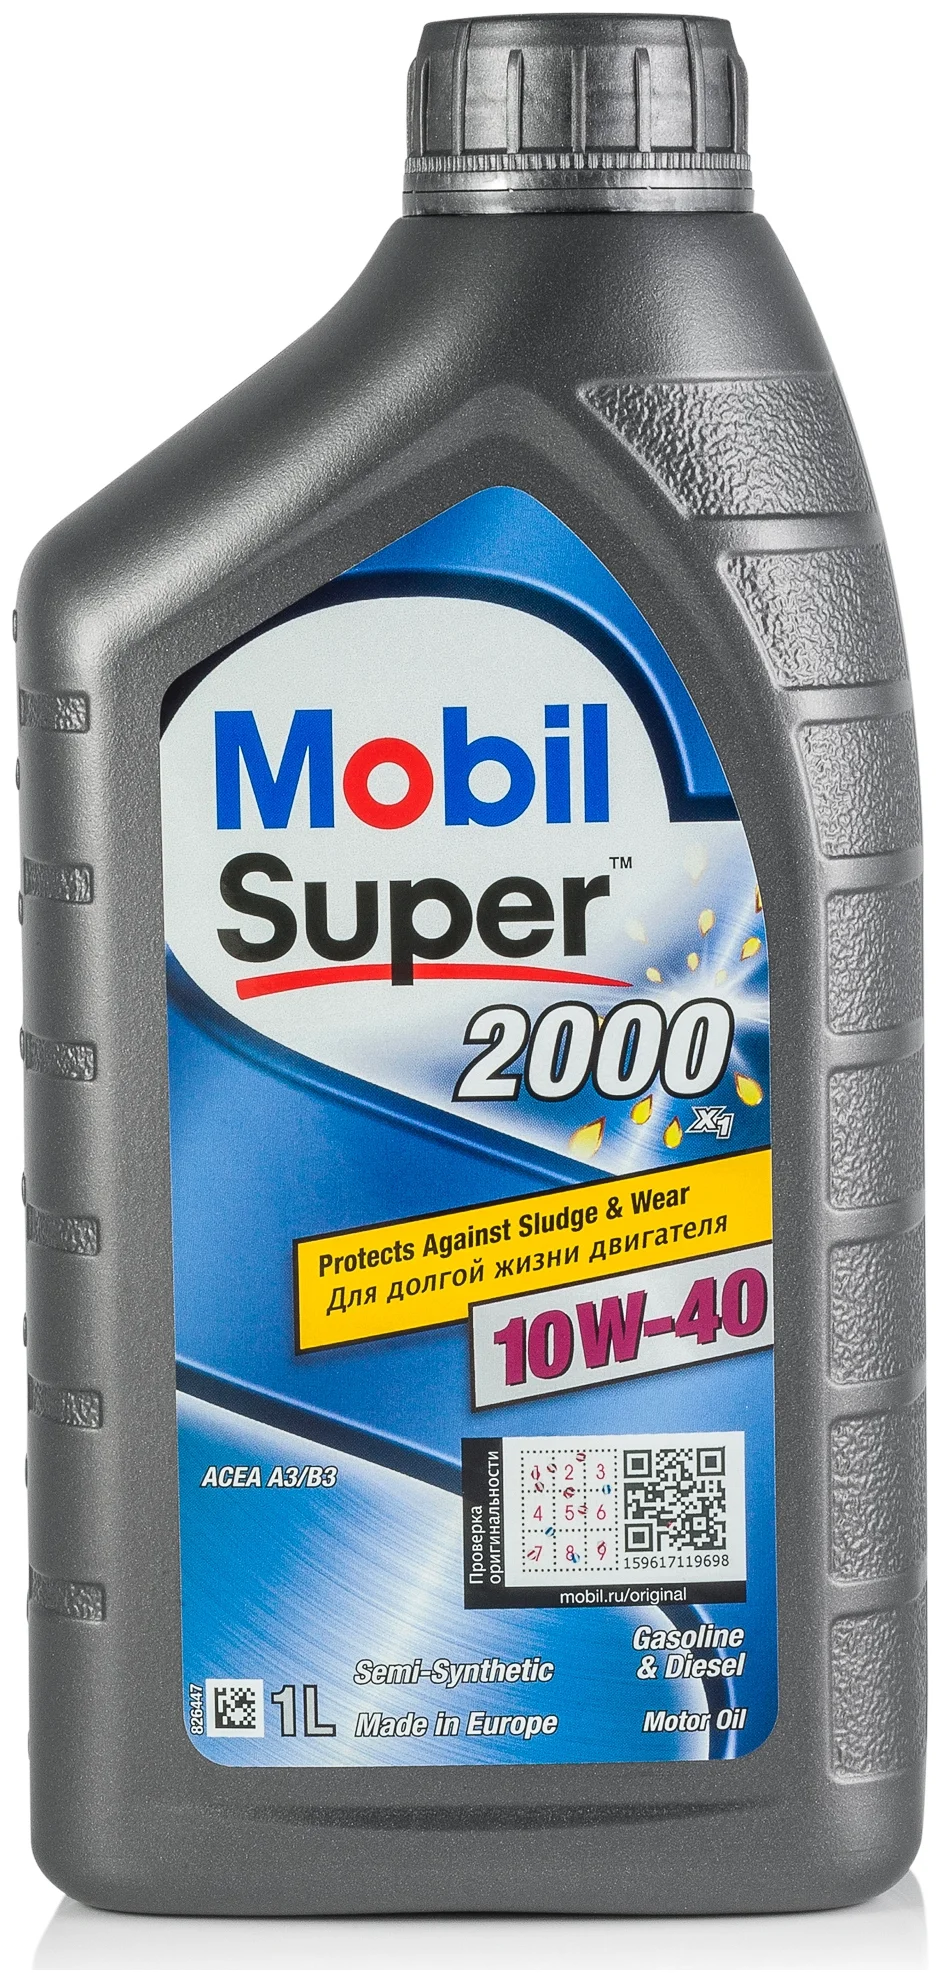 MOBIL Super 2000 X1 10W-40 - класс вязкости: 10W-40